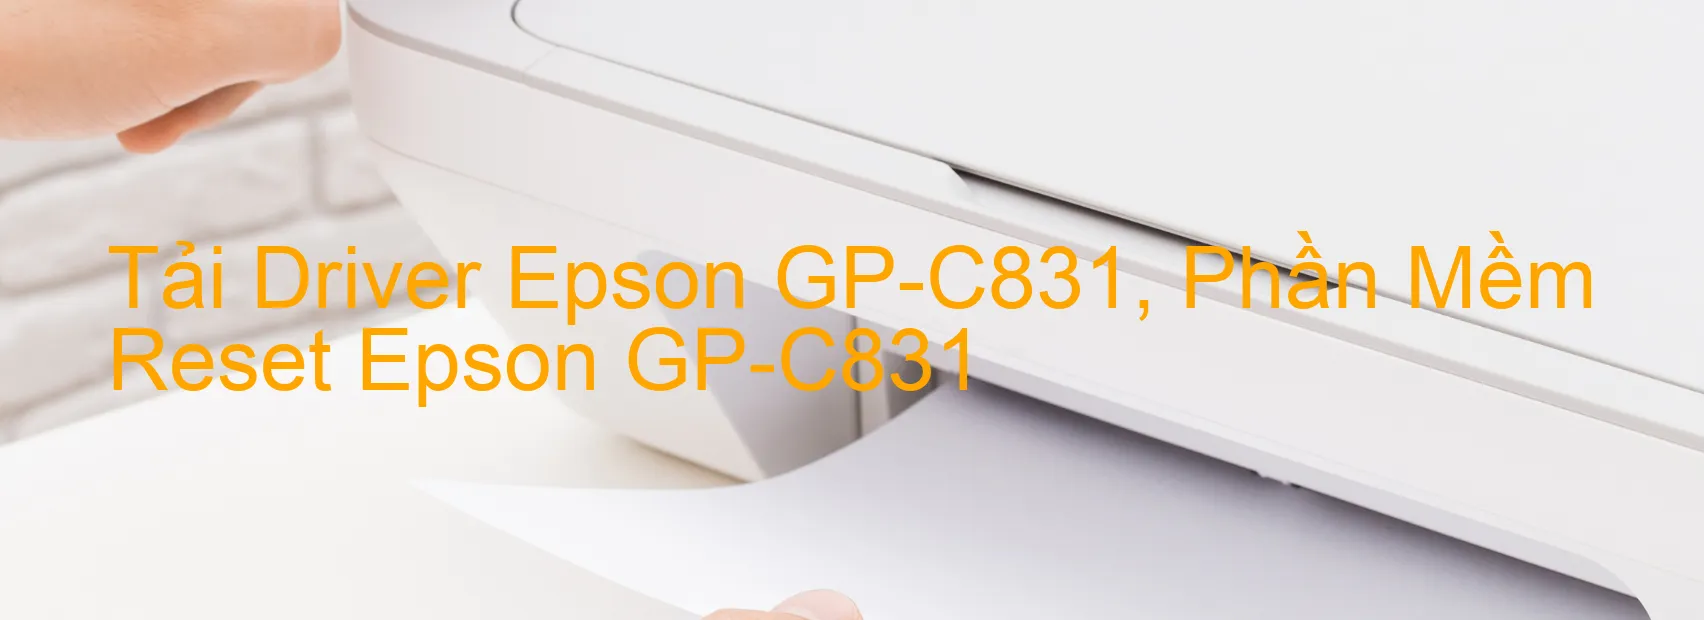 Driver Epson GP-C831, Phần Mềm Reset Epson GP-C831